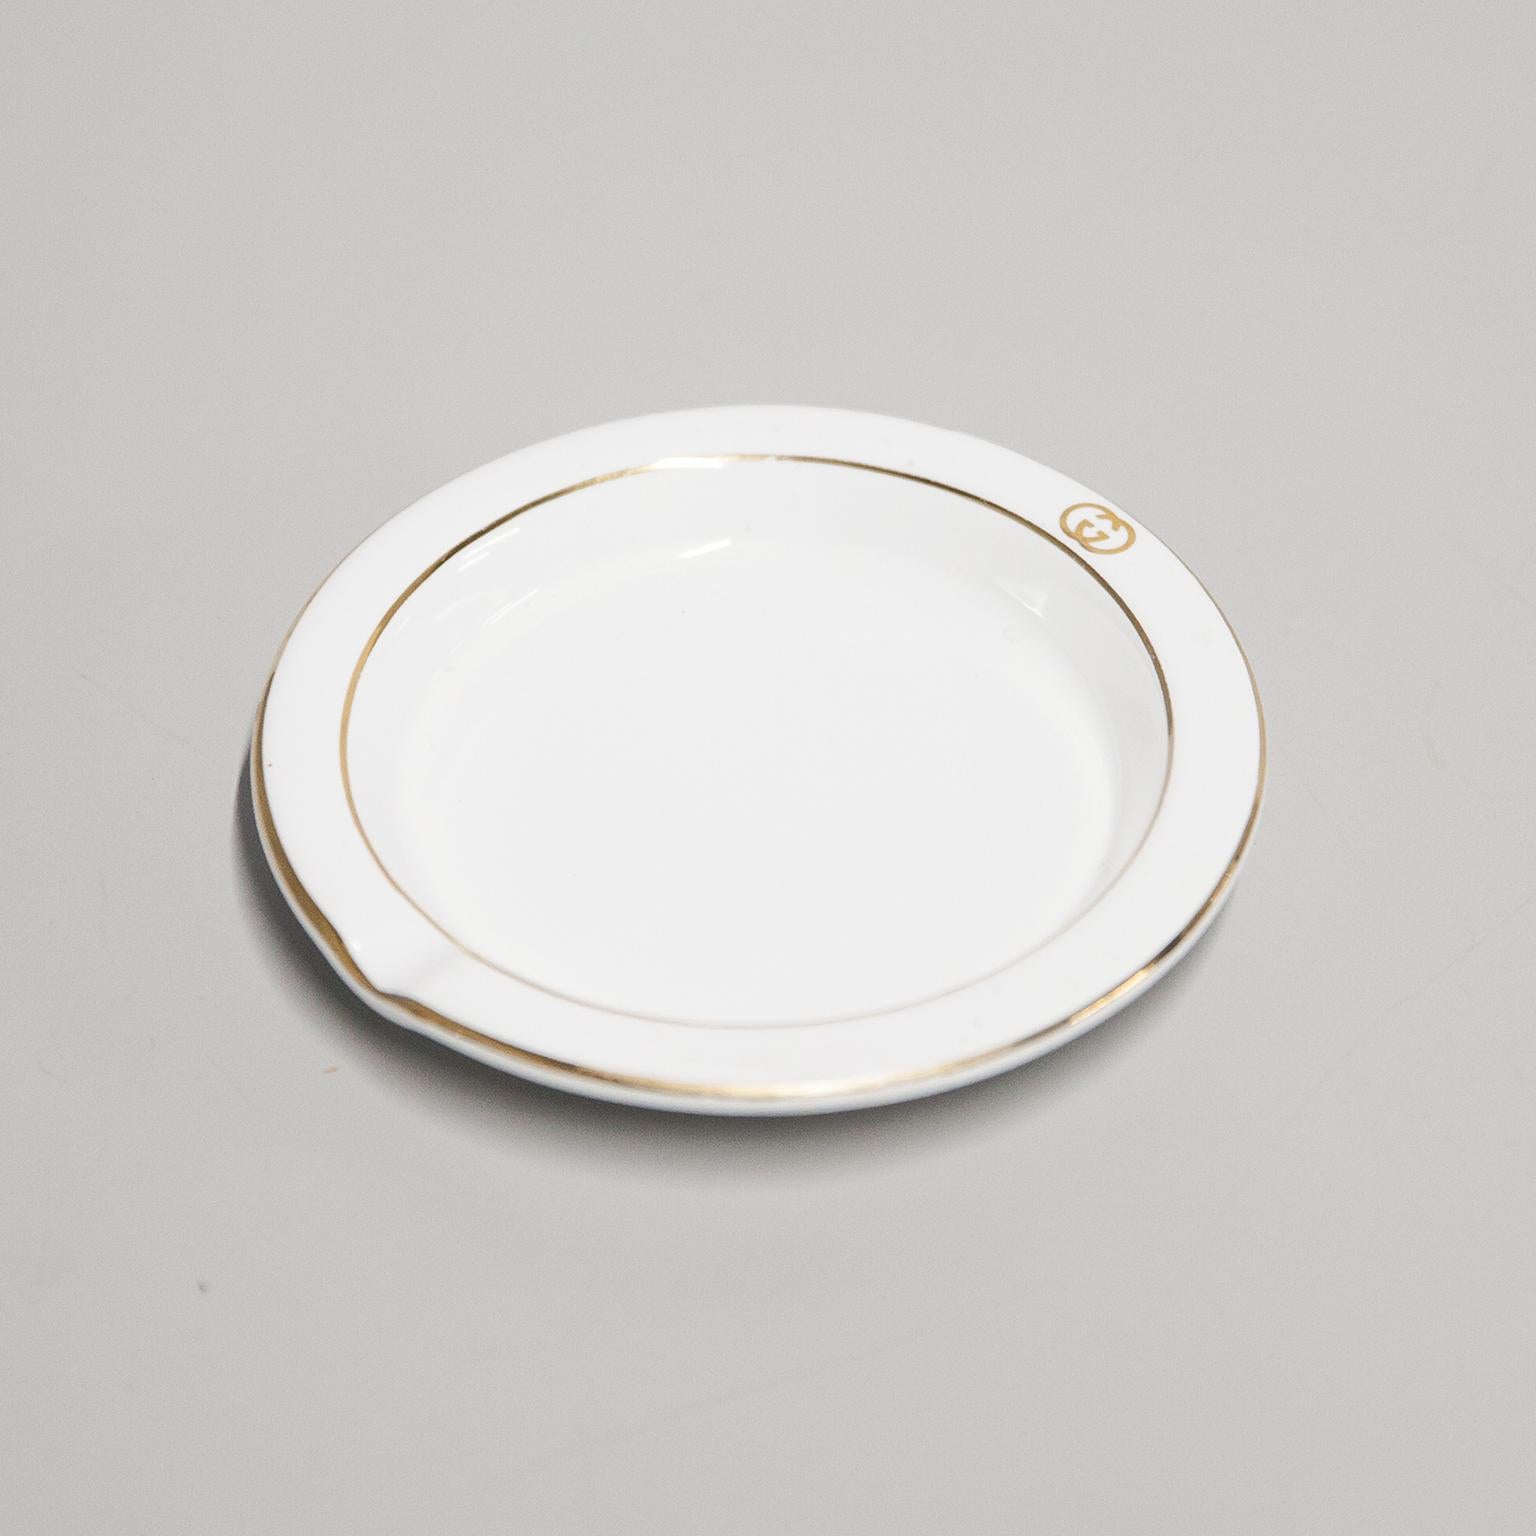 Silvered Gucci Vintage Porcelain Plates 1970s For Sale